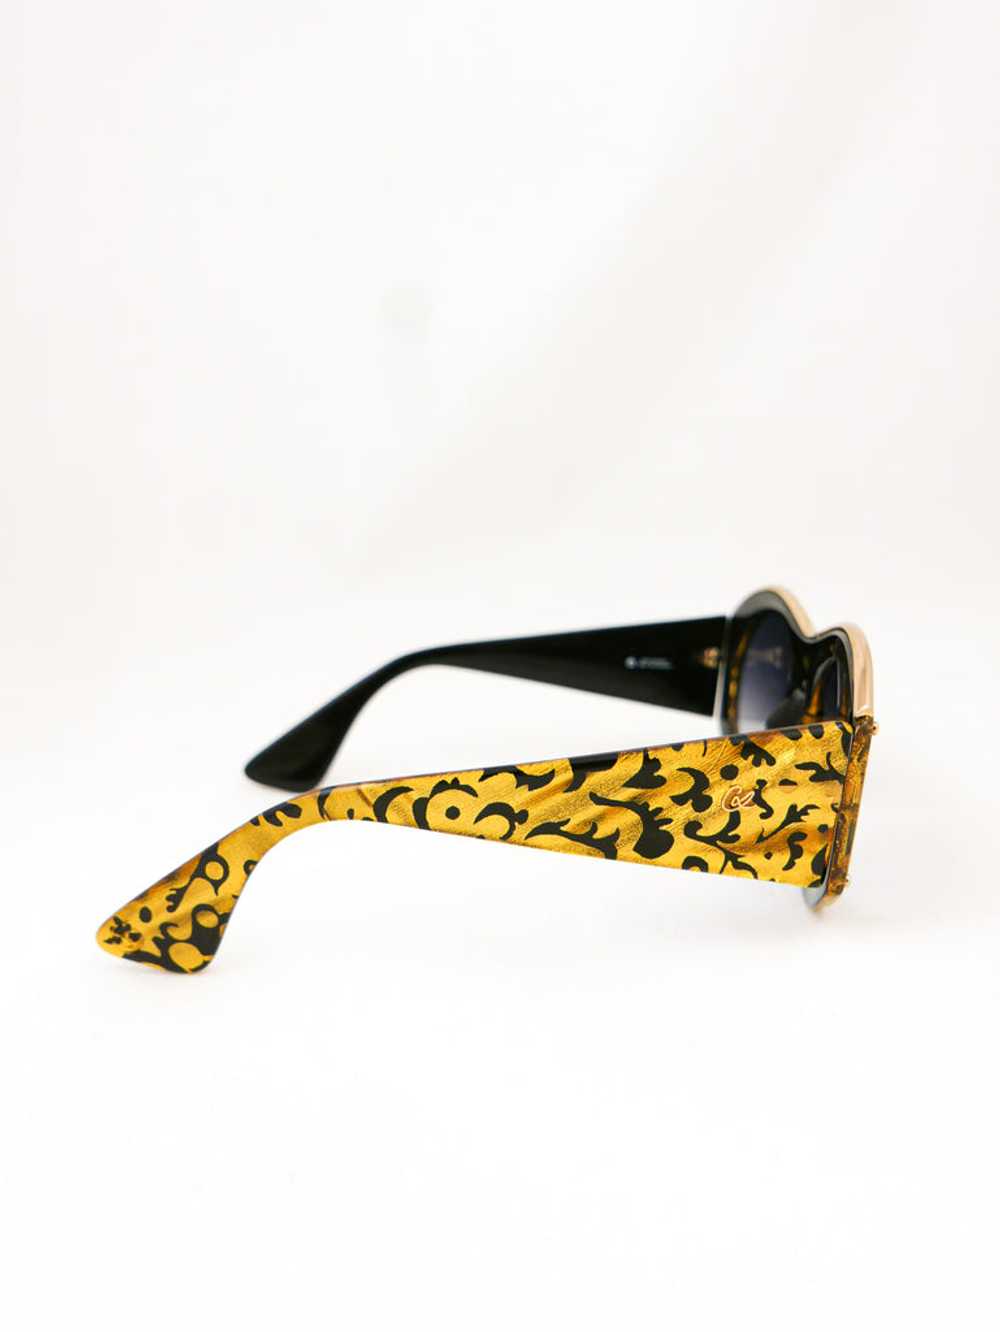 Christian Lacroix Sunglasses - image 7